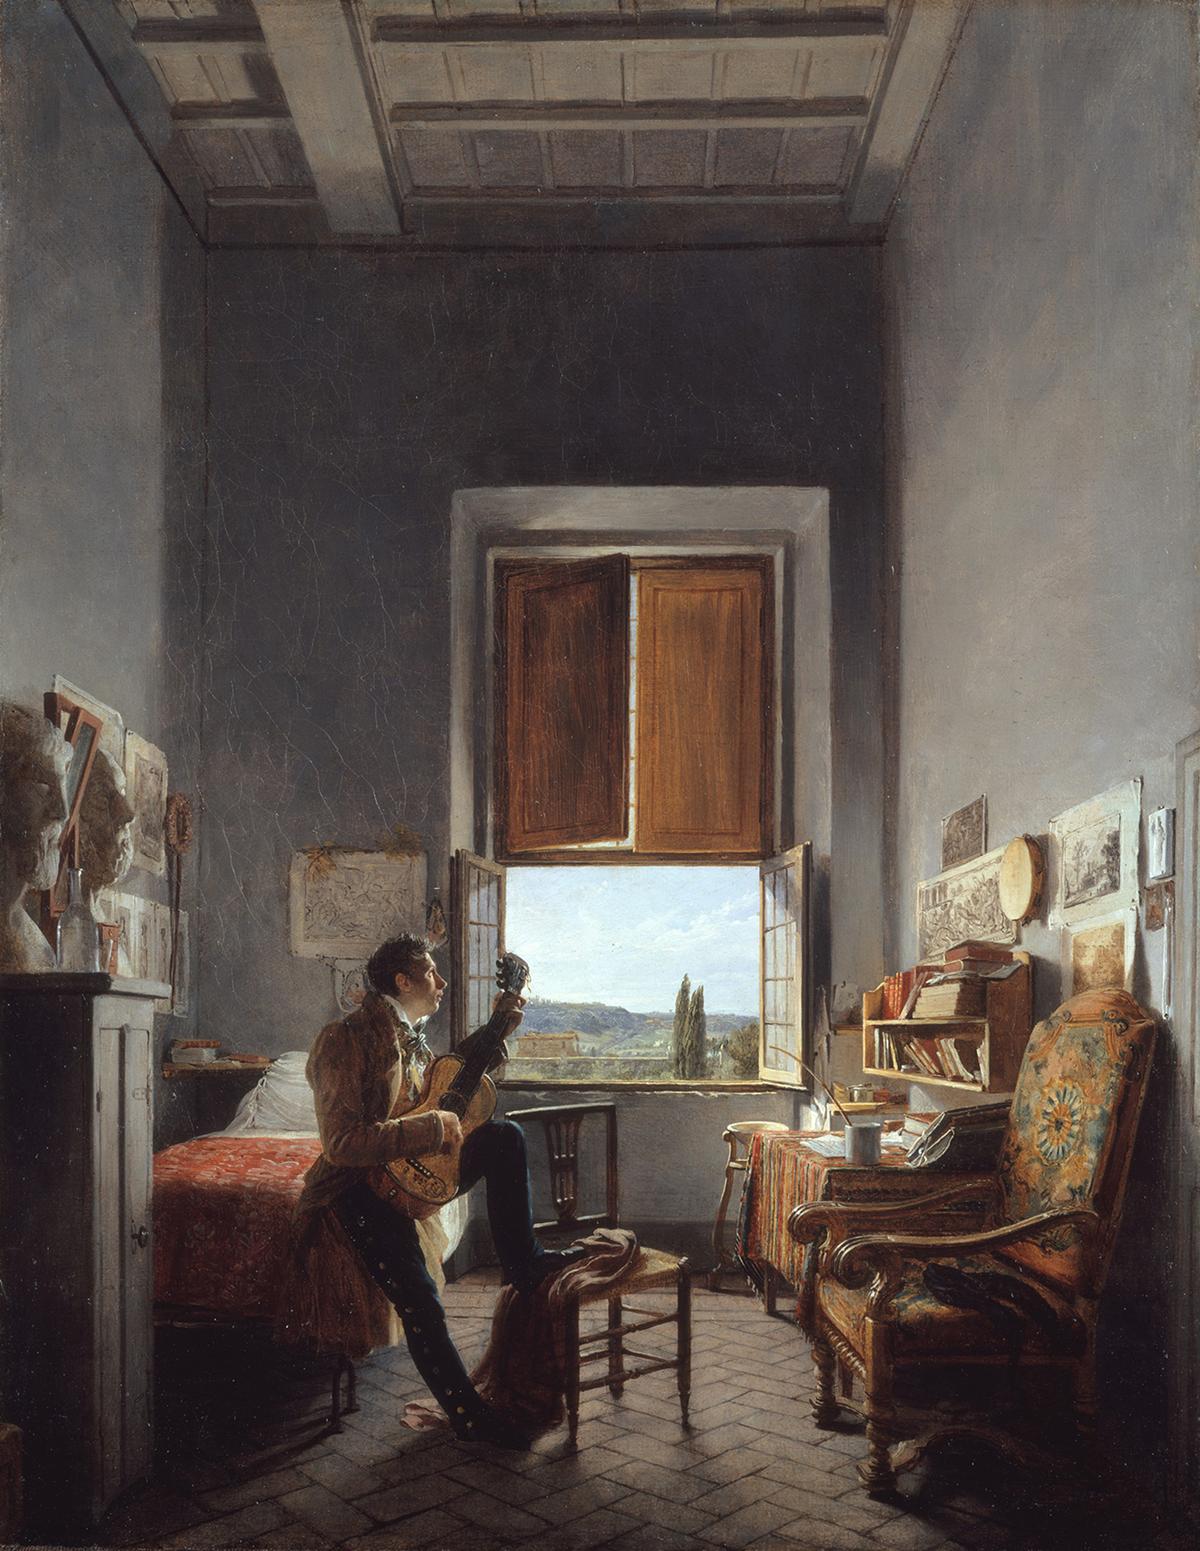 "Léon Pallière in His Room at the Villa Medici, Rome," 1817, by Jean Alaux. Oil on canvas. Metropolitan Museum of Art, New York. (Public Domain)